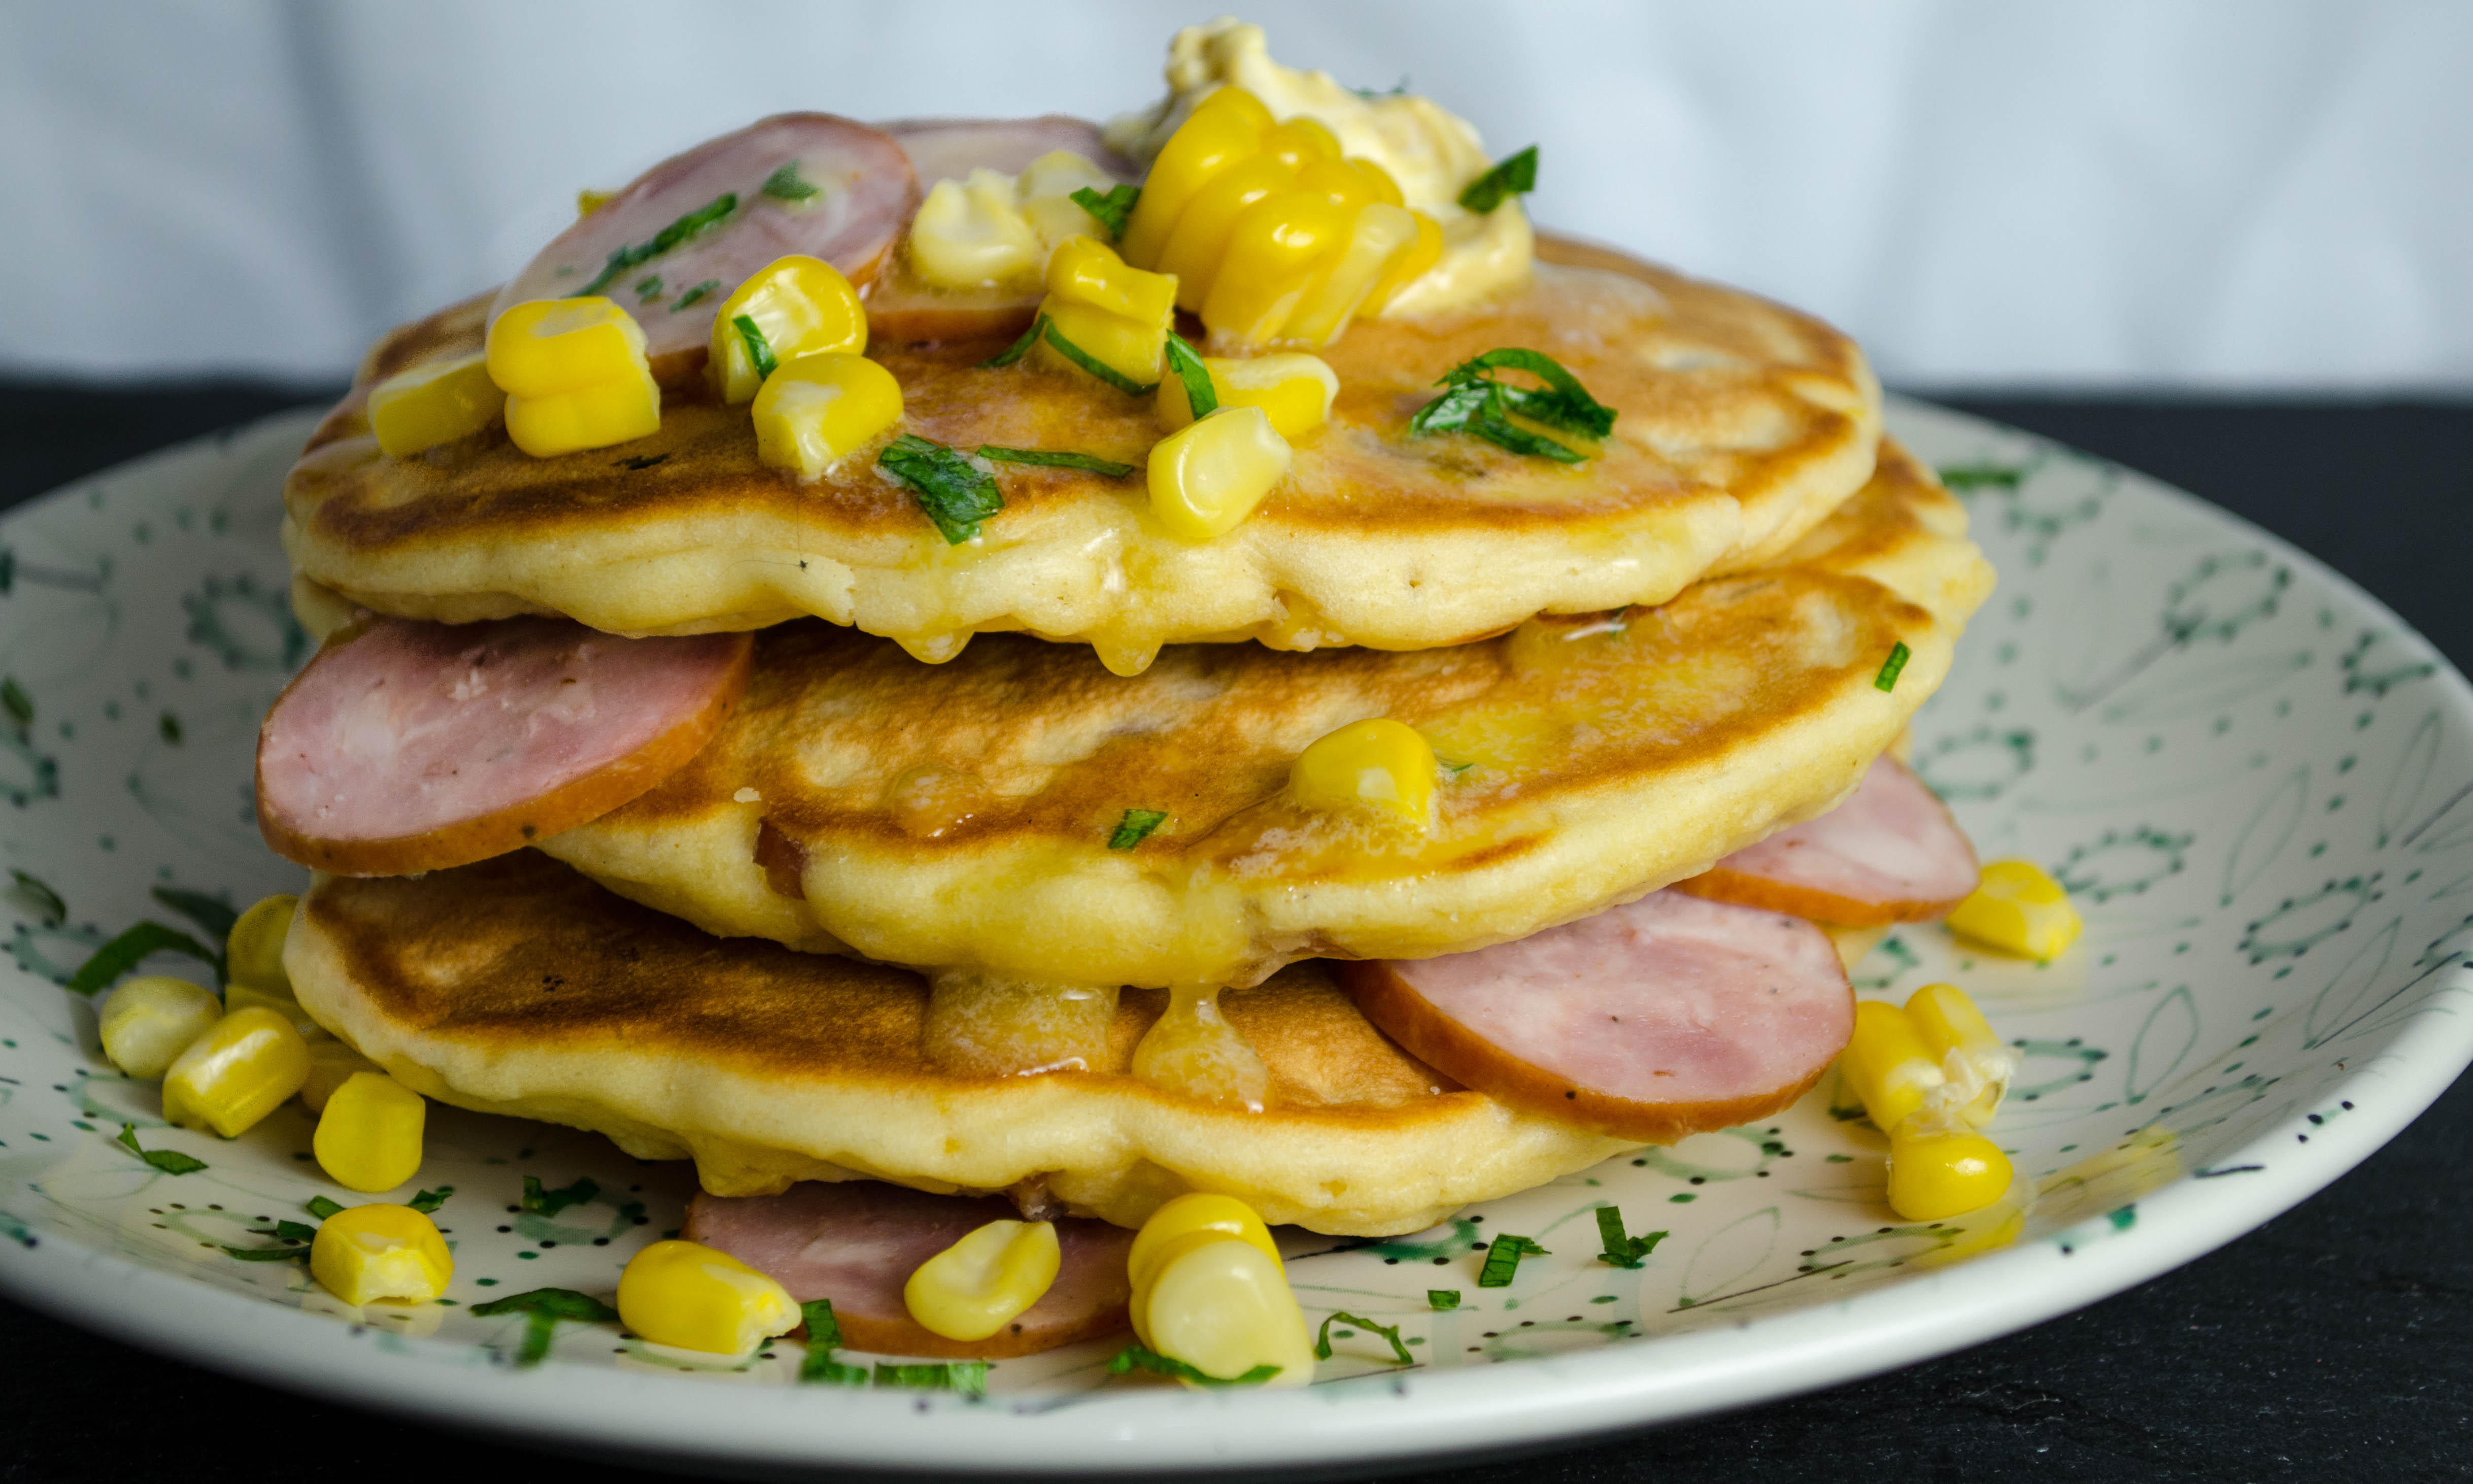 Featured image for “Kielbasa & Corn Savory Pancakes”